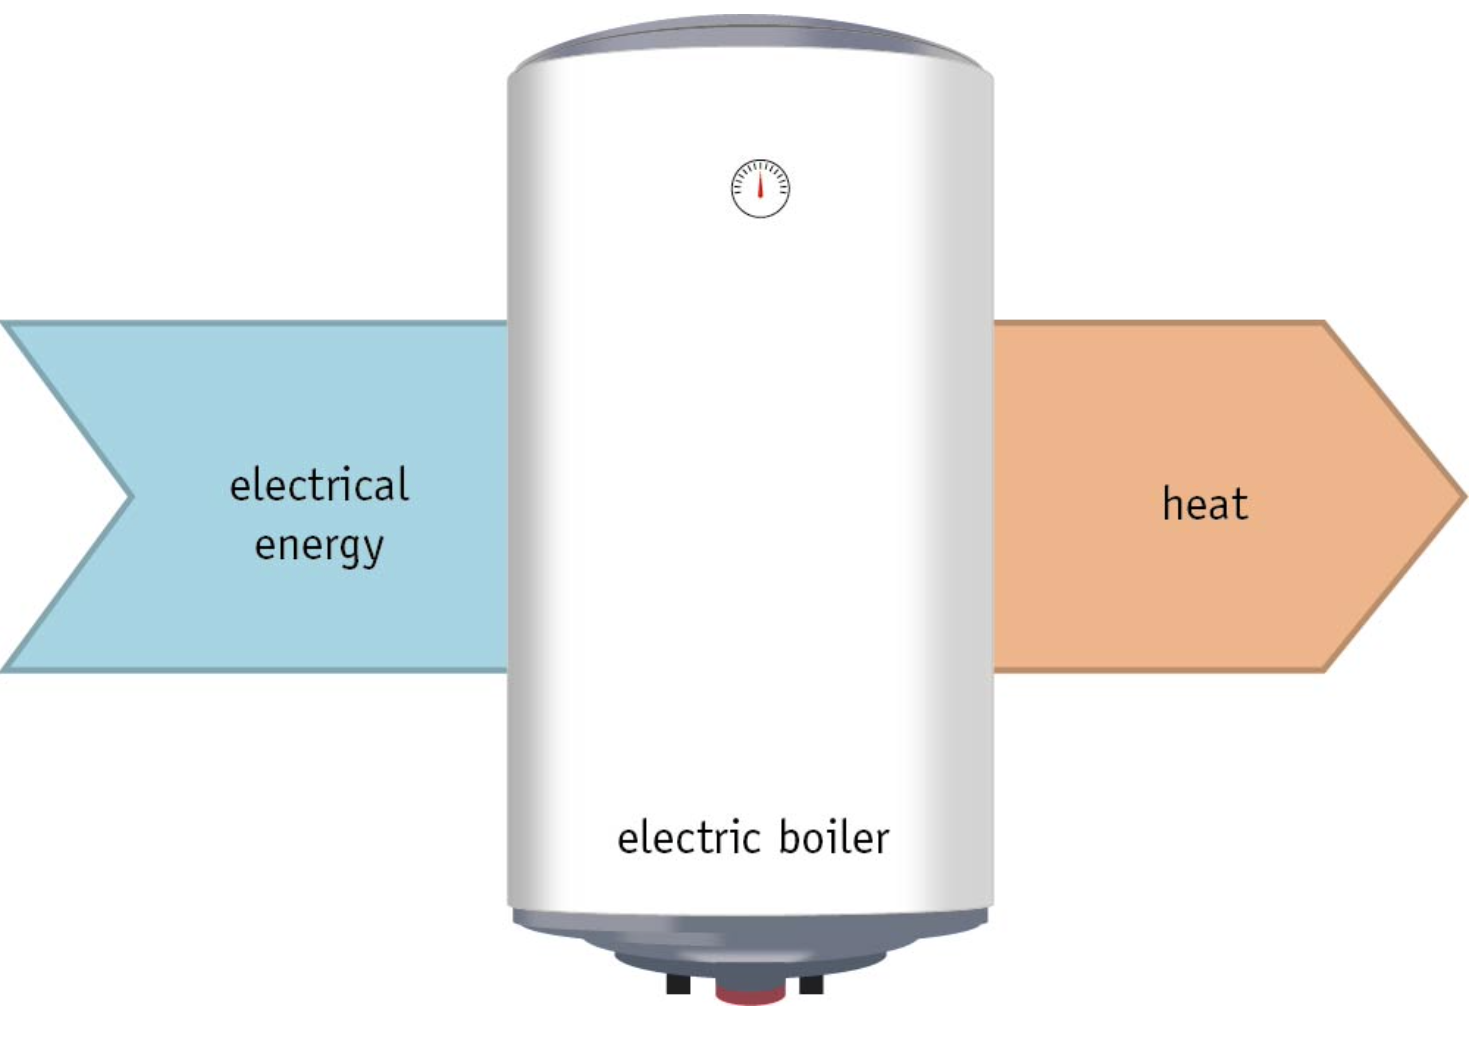 energy flow diagram for electric boiler